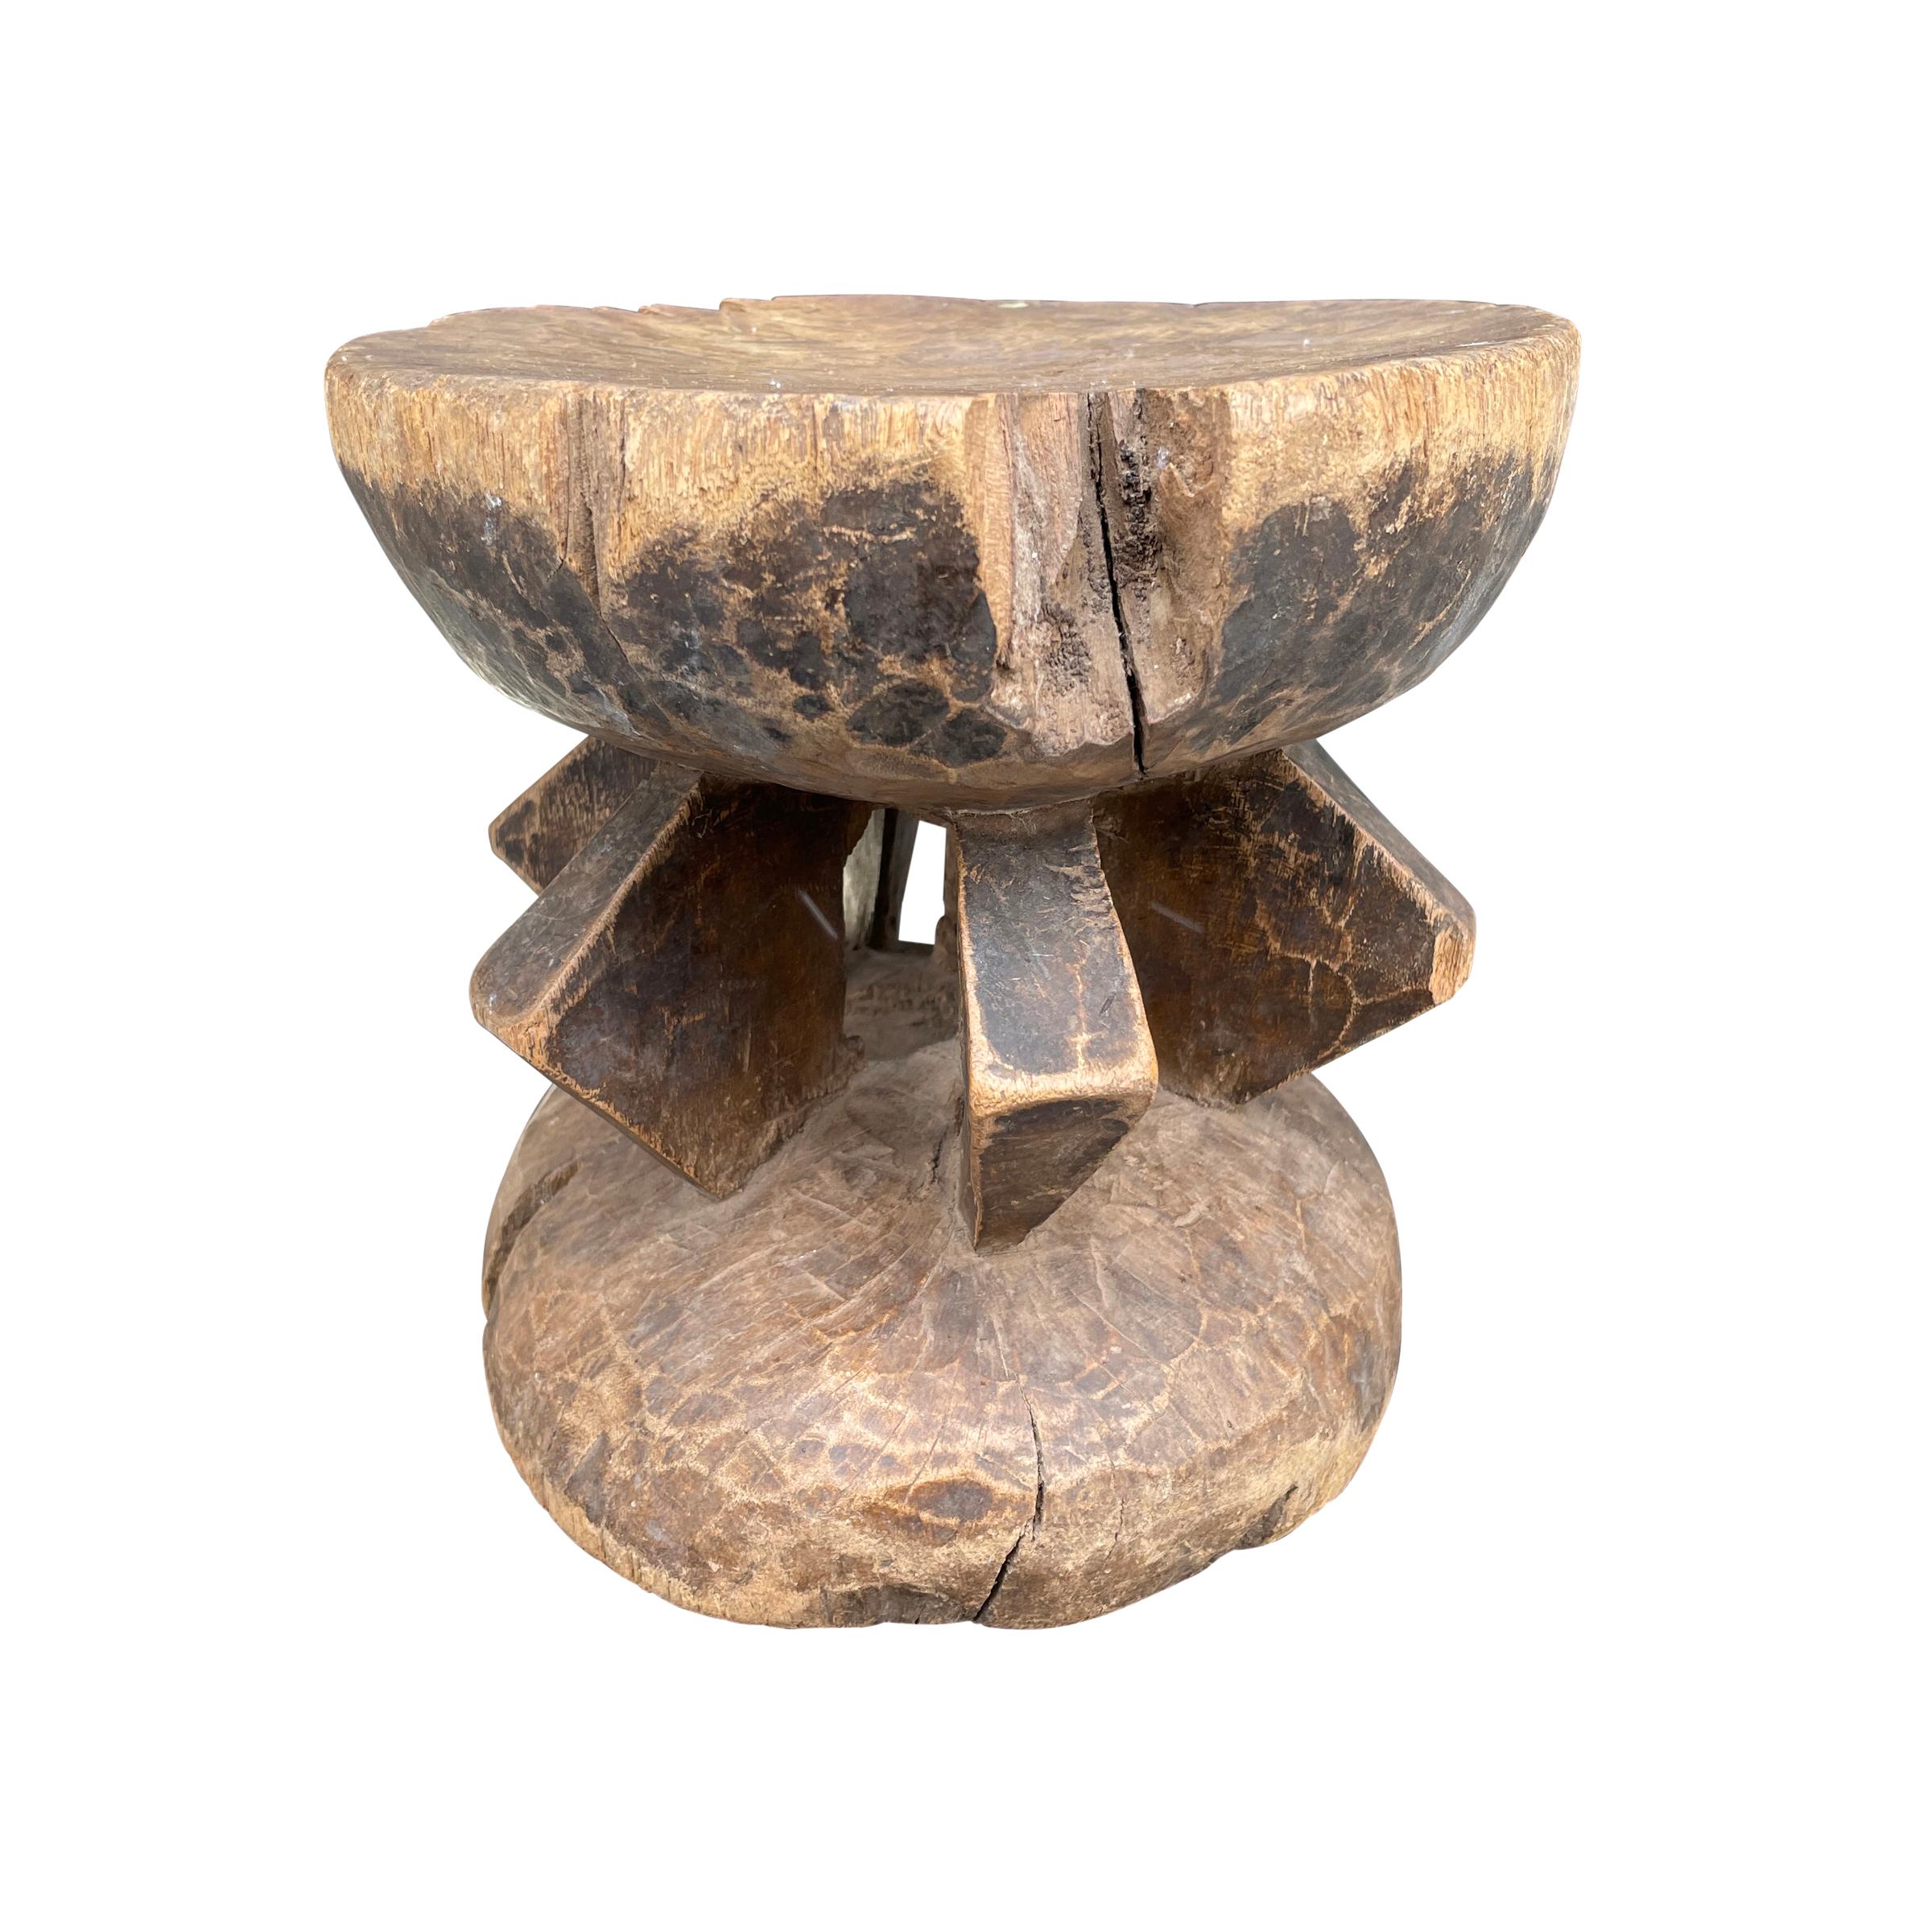 Malian Dogon Wooden Stool